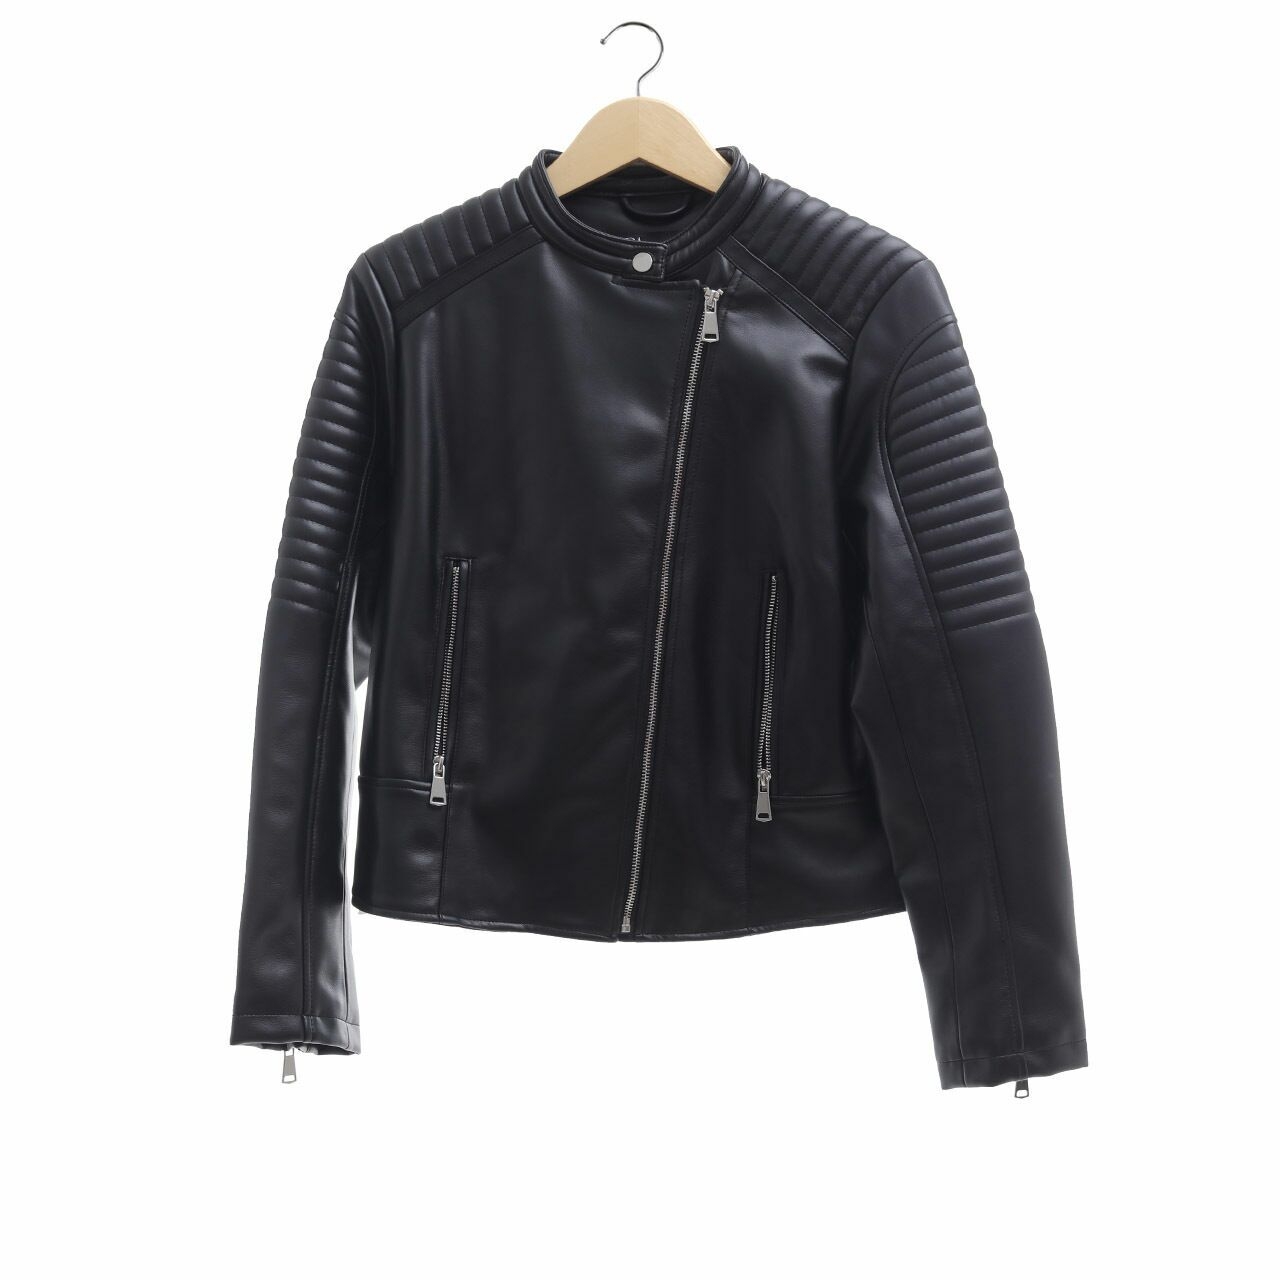 Zara Black Jacket